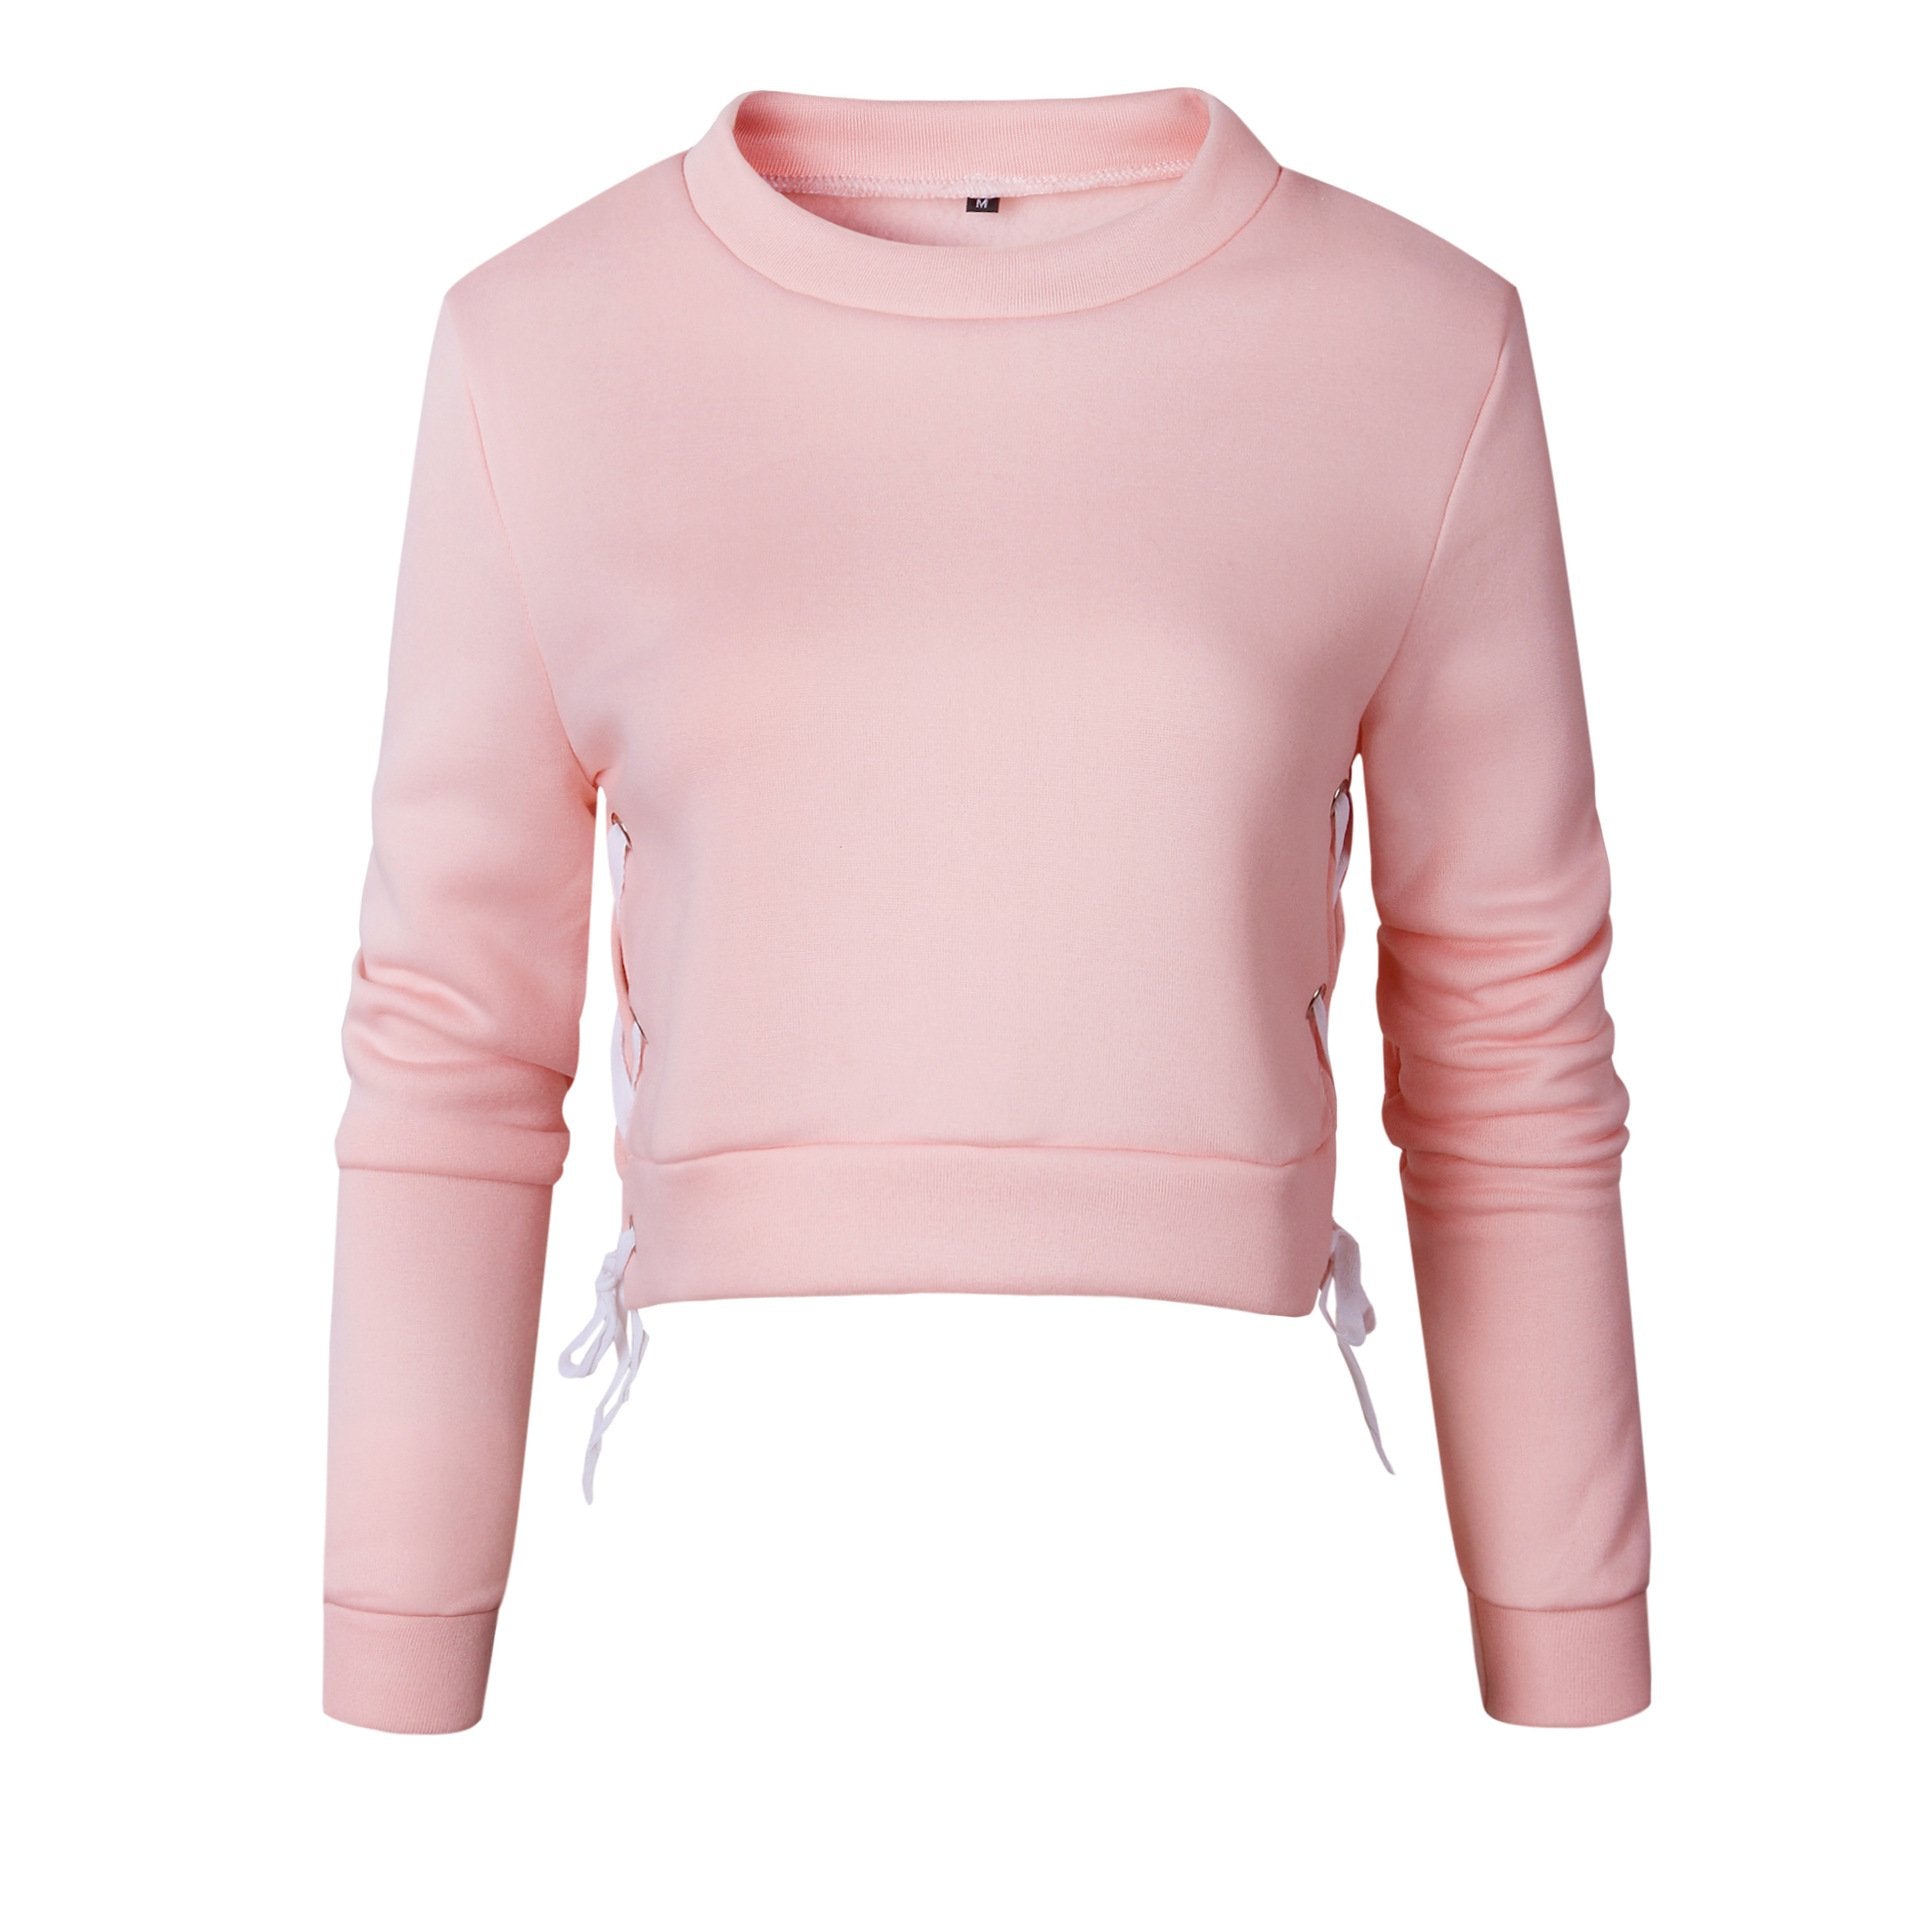 Side Straps Lace Up Solid Color Crop Top Sweatshirt